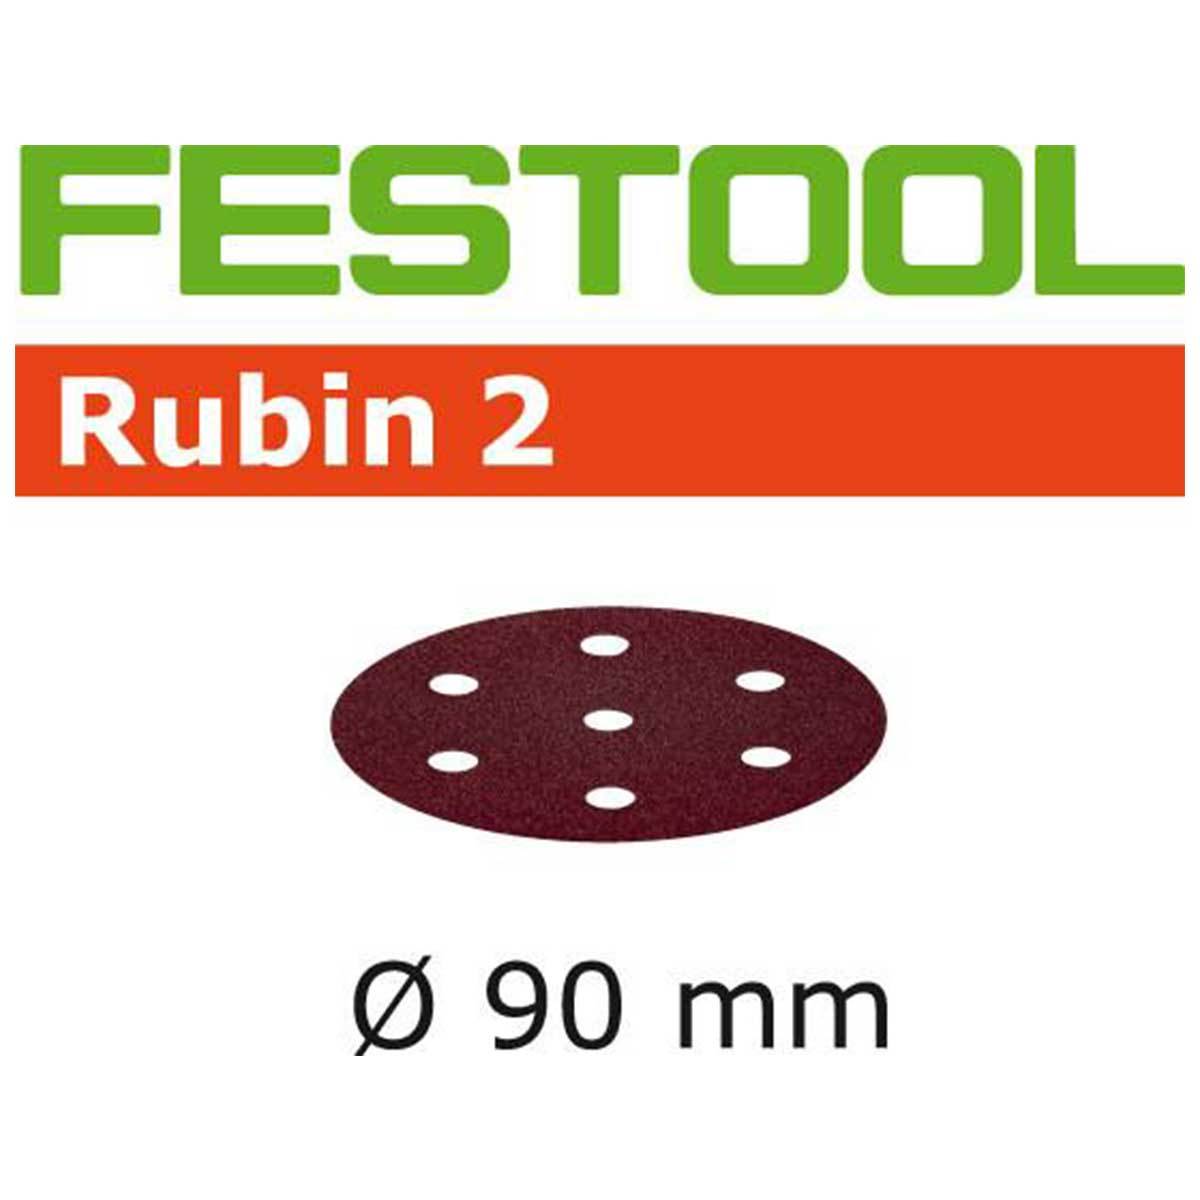 Festool 90mm diameter Rubin 2 StickFix aluminum oxide abrasive disc.